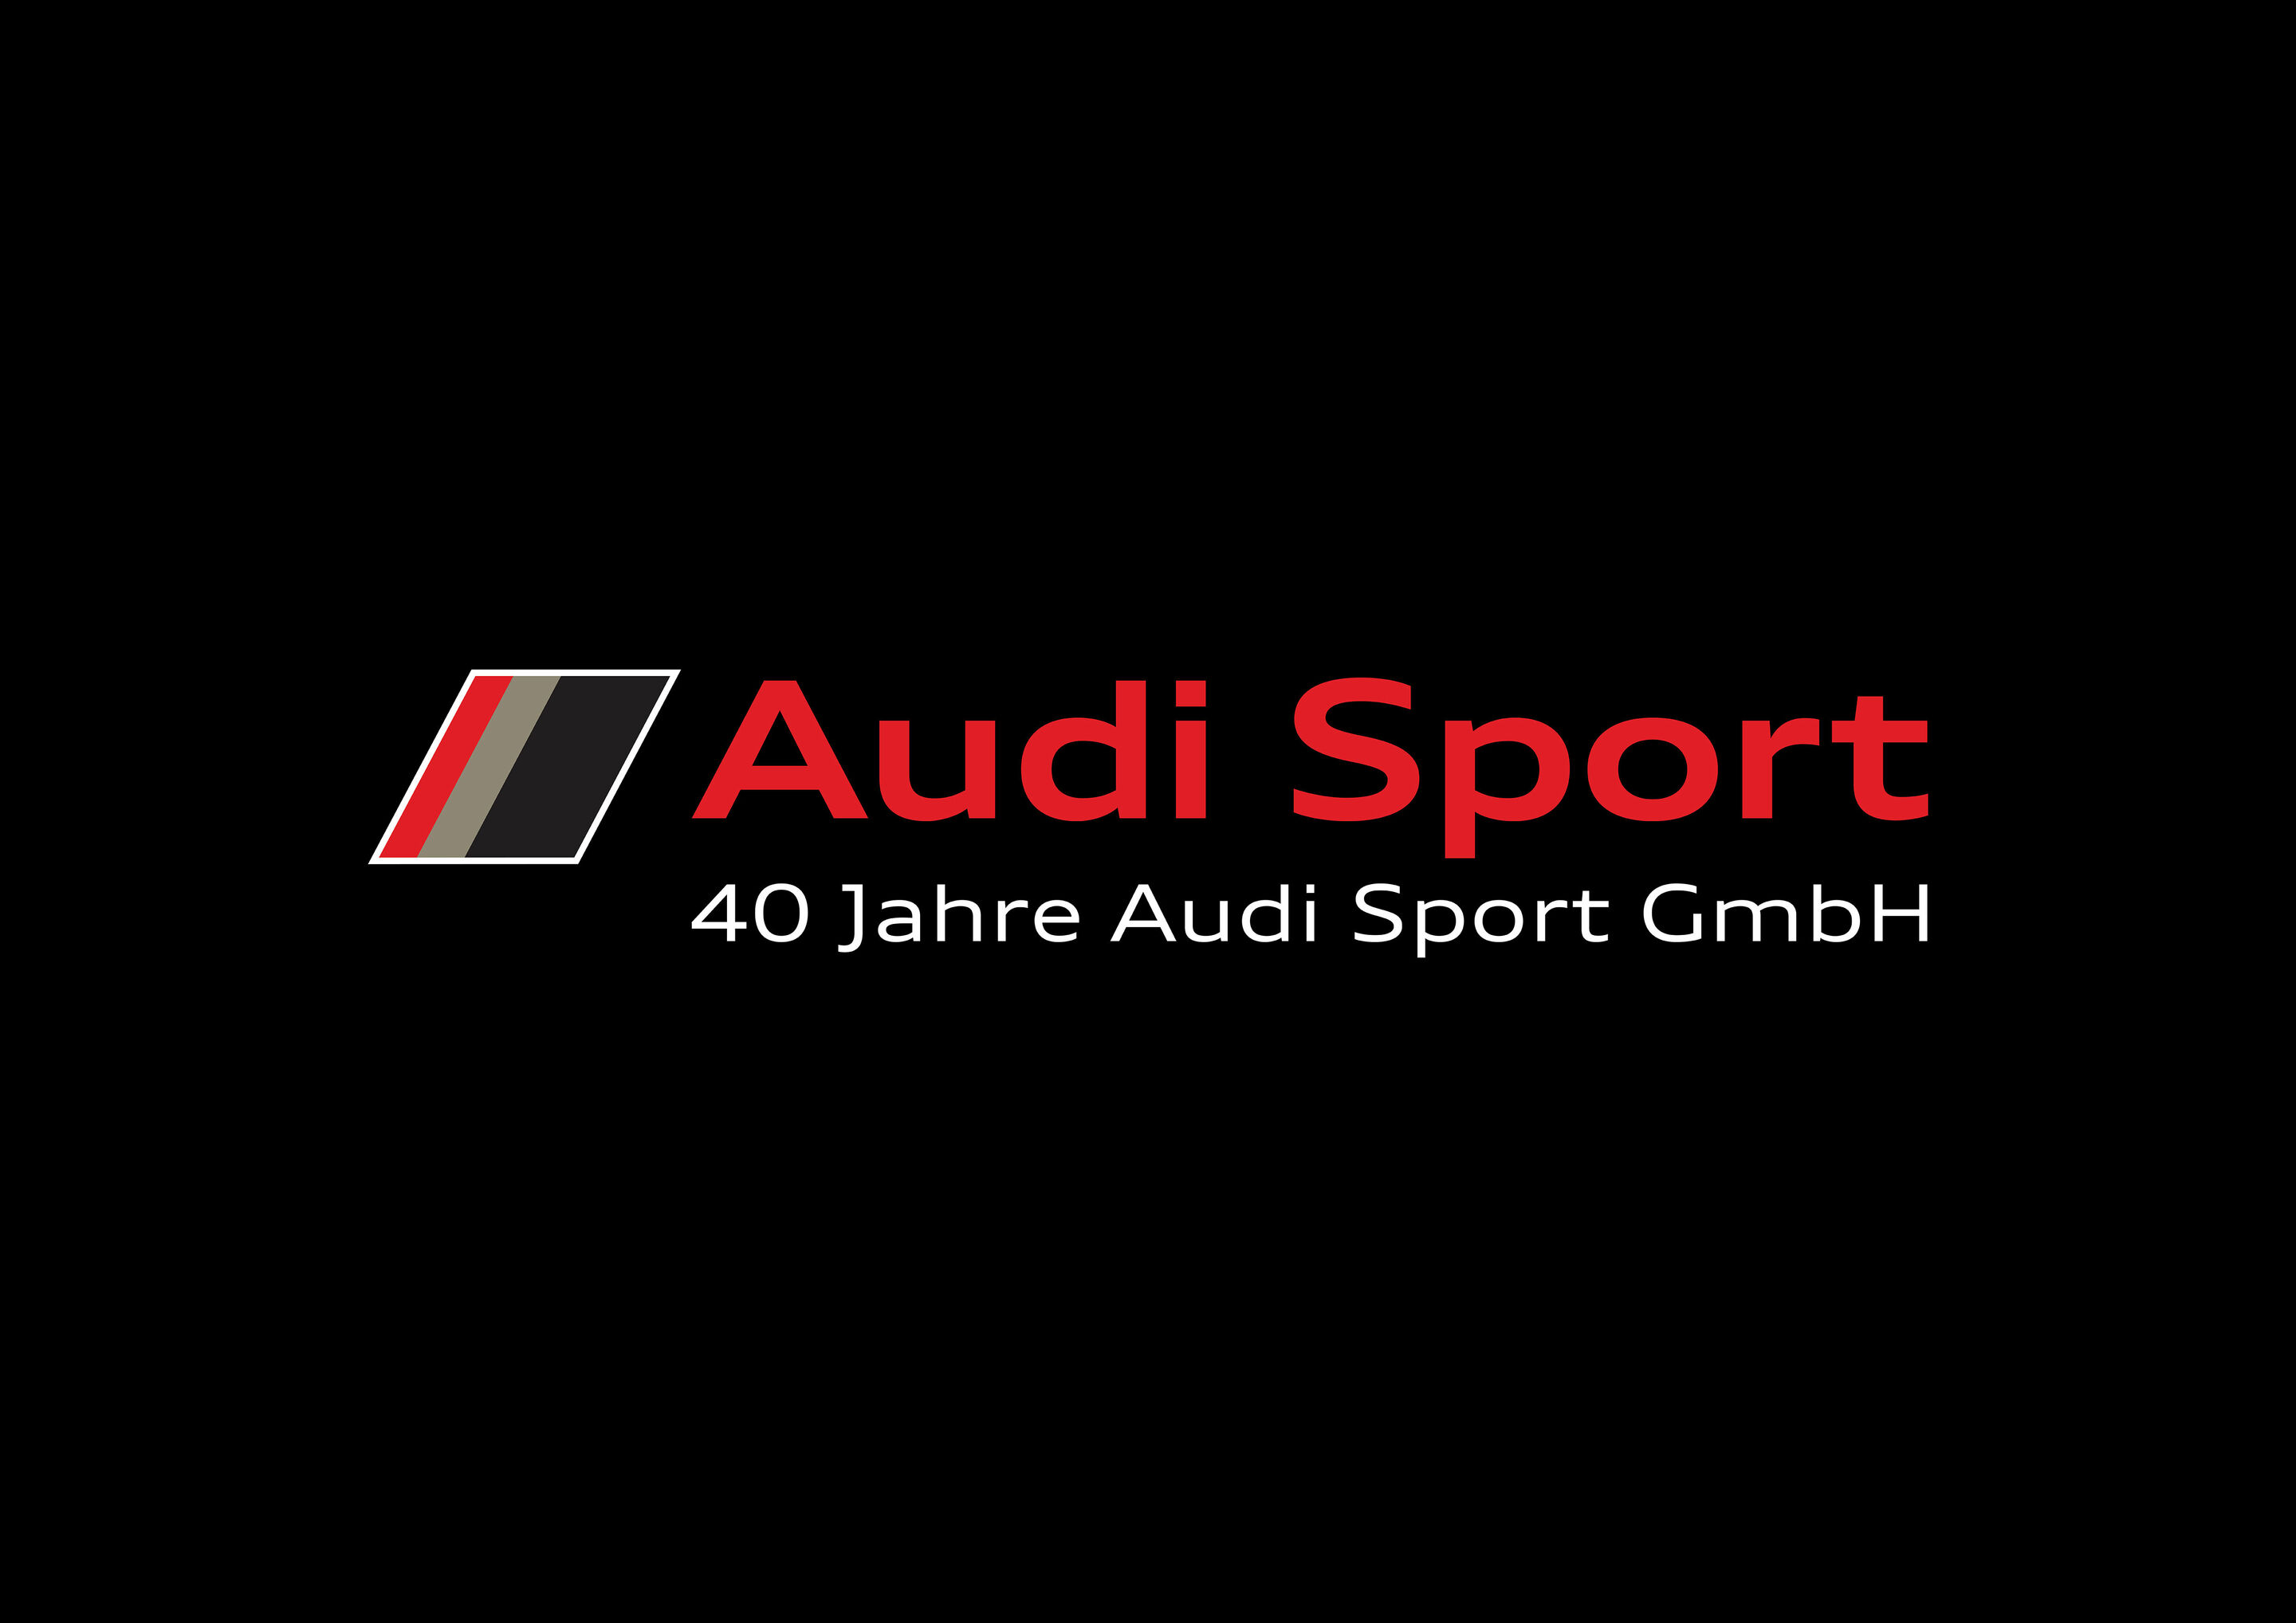 40 years of Audi Sport GmbH